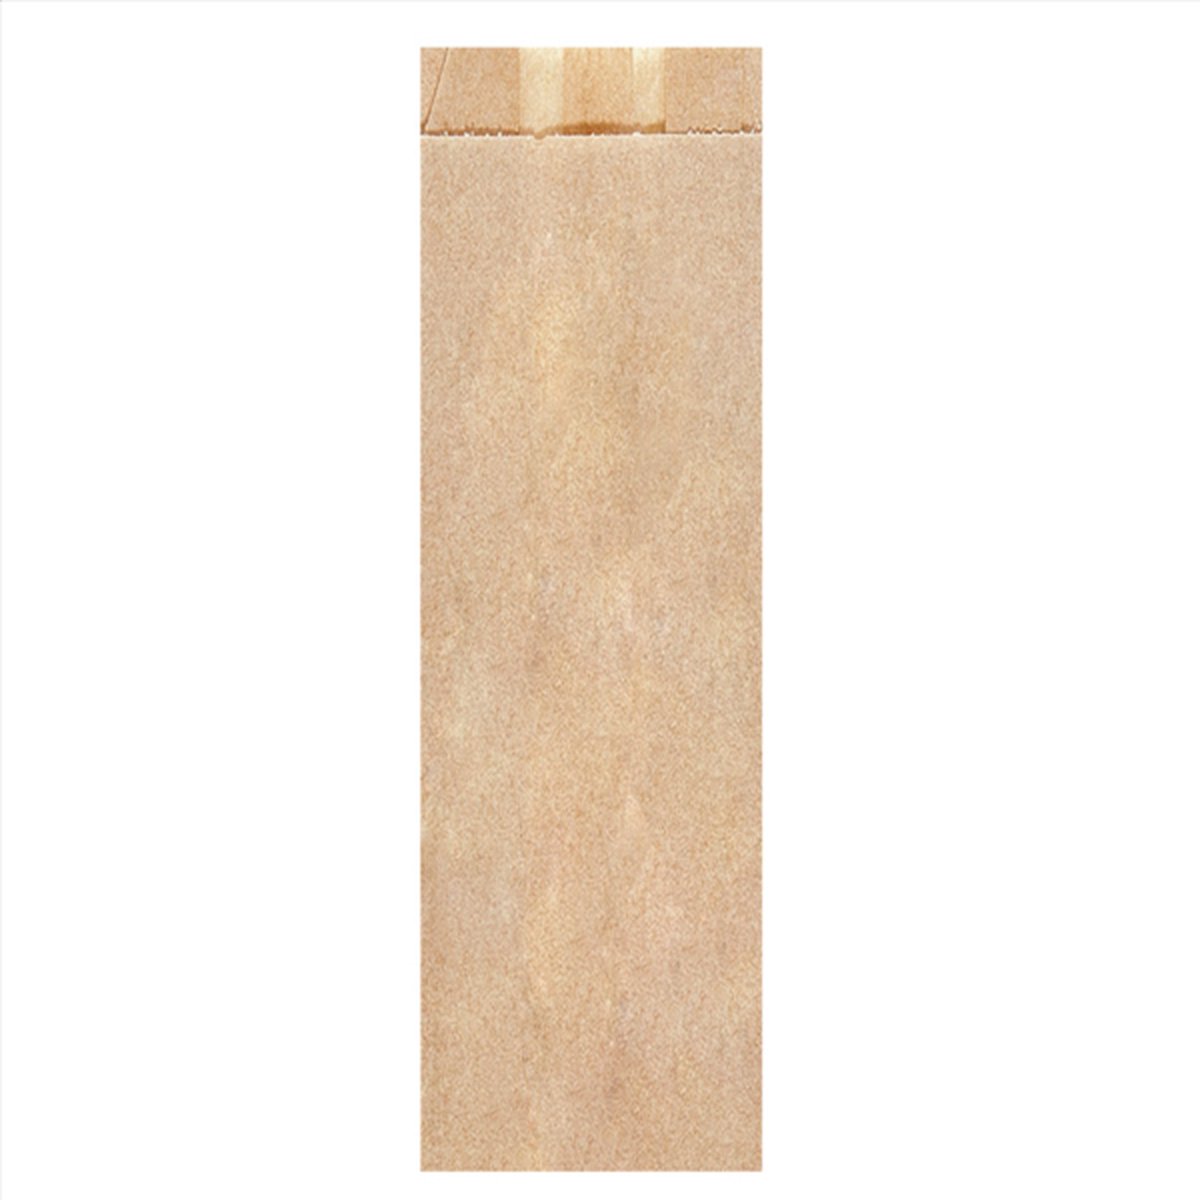 Broodzakje kraft papier 14+9x46 cm | Inhoud: 500 stuks